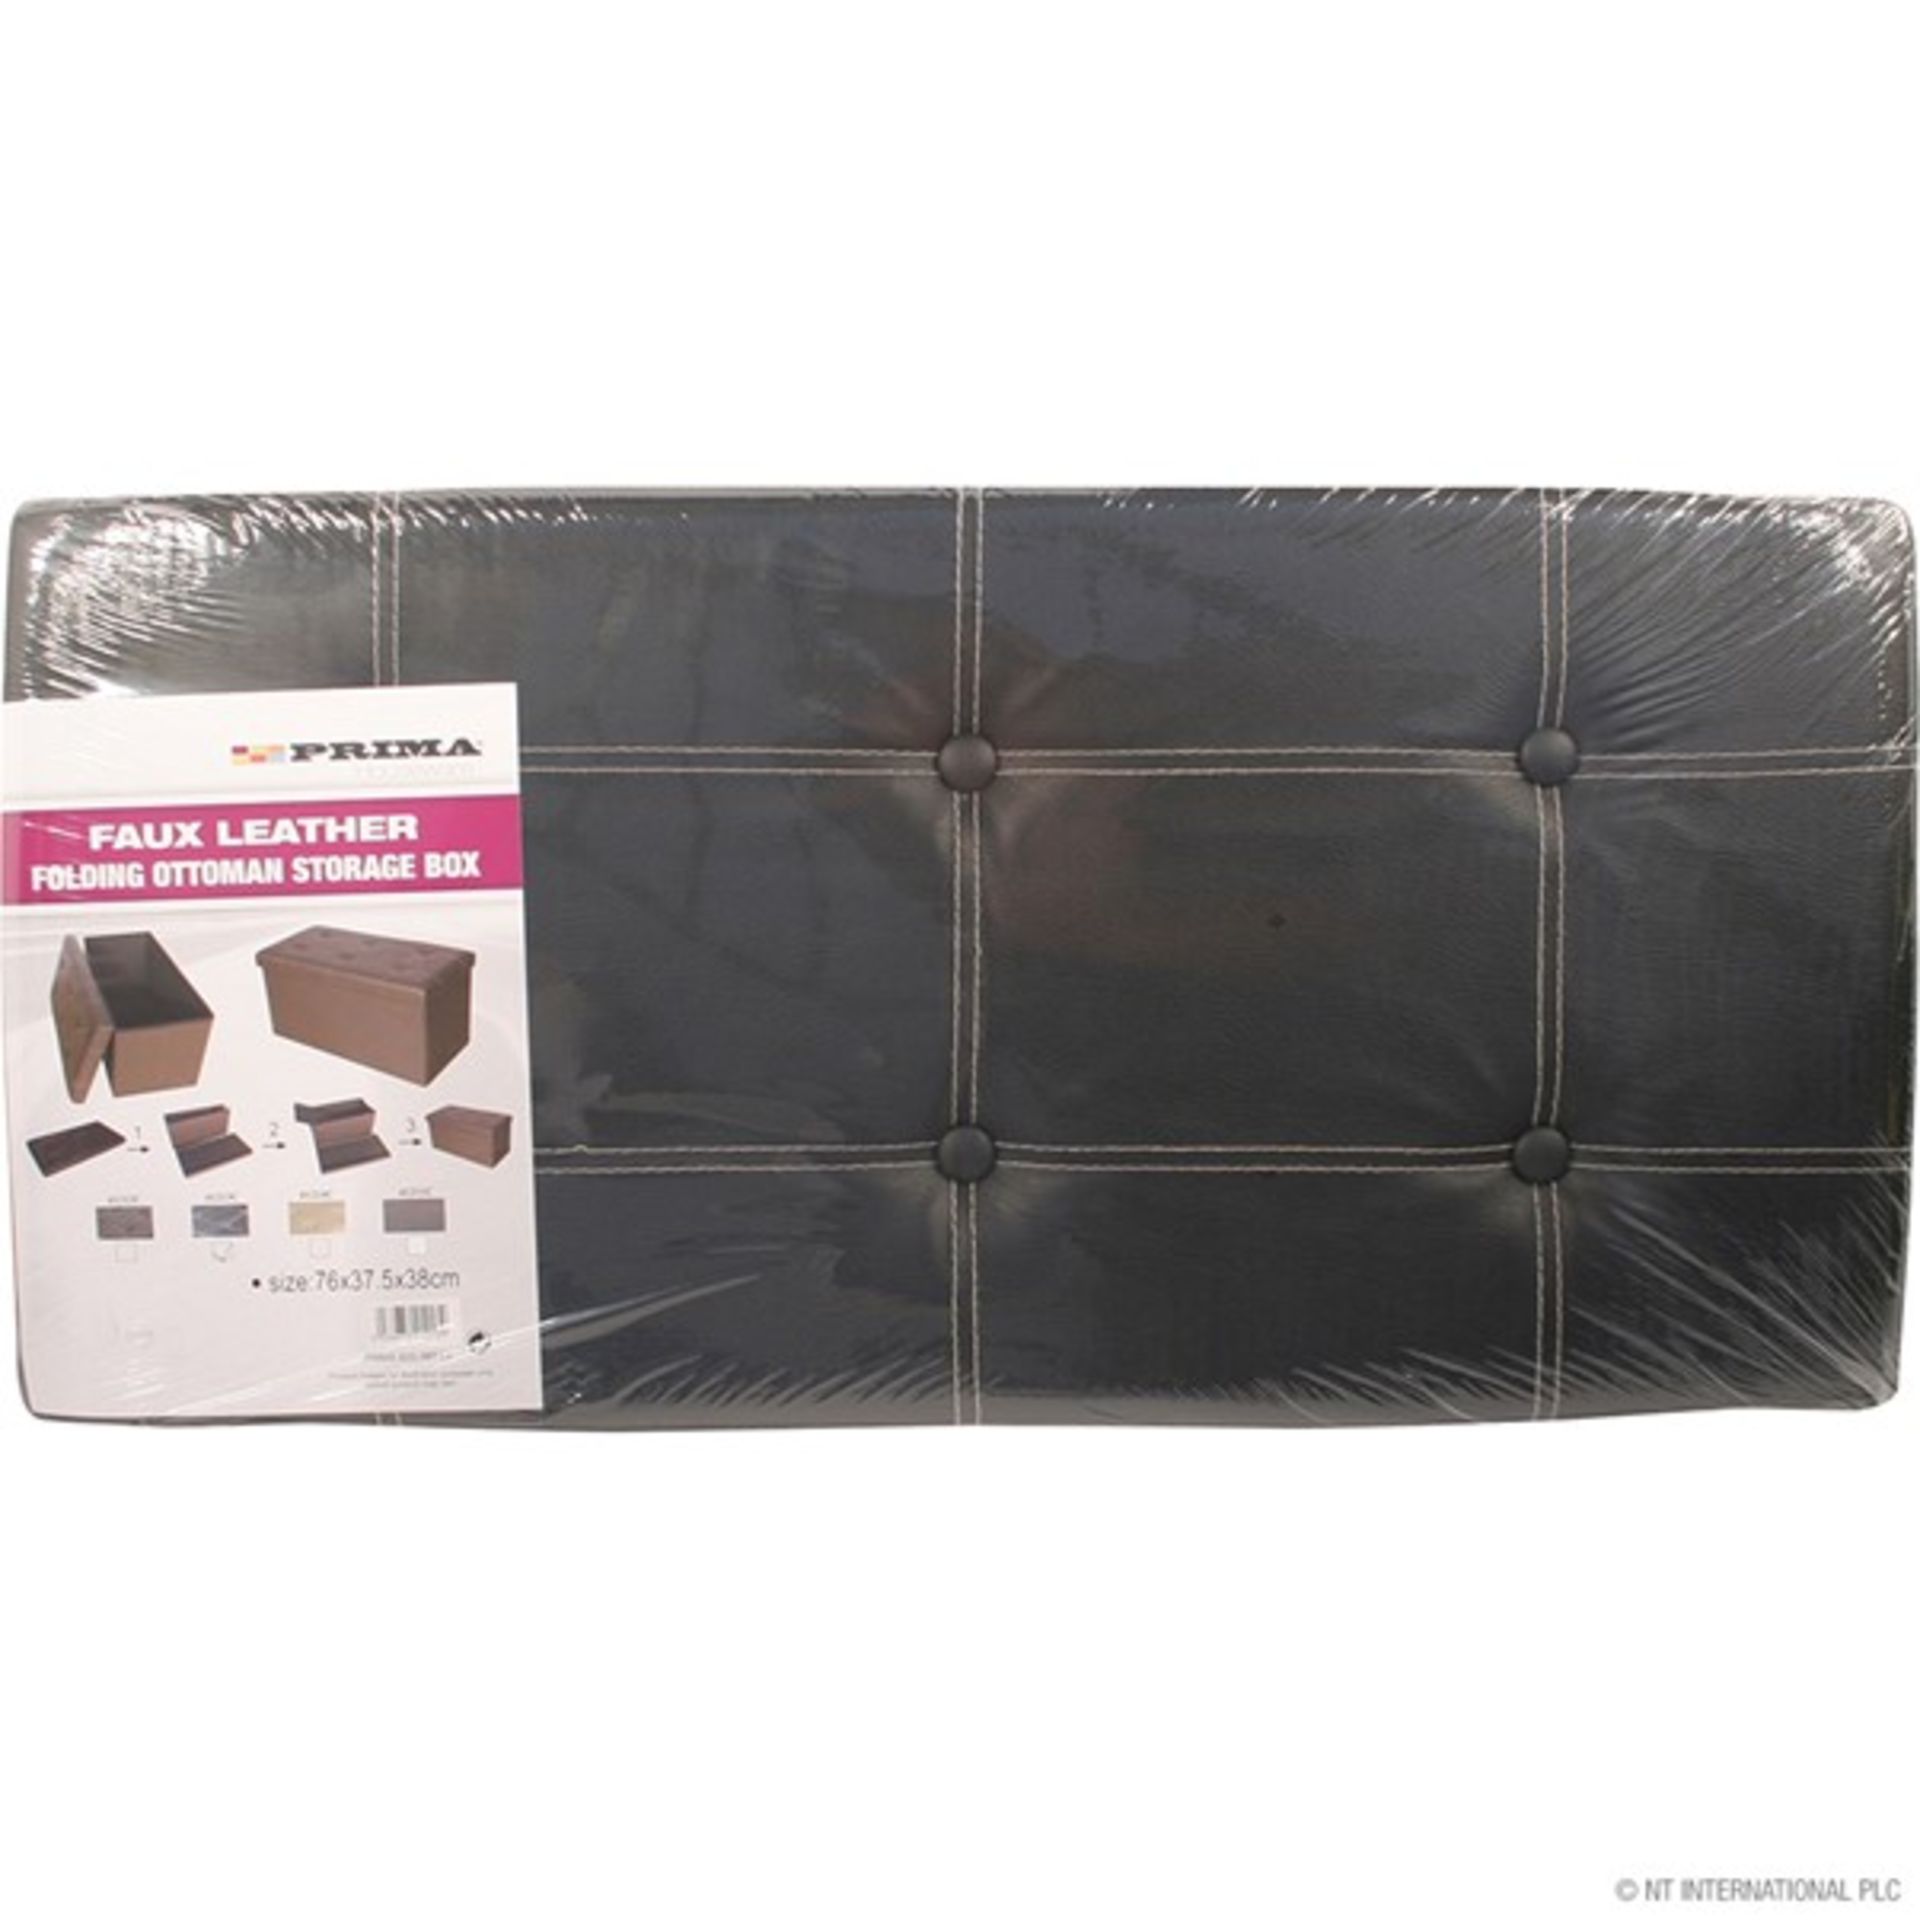 New Black Faux Leather Folding Ottoman Storage Box - 76 x 38 x 38cm - Image 2 of 2